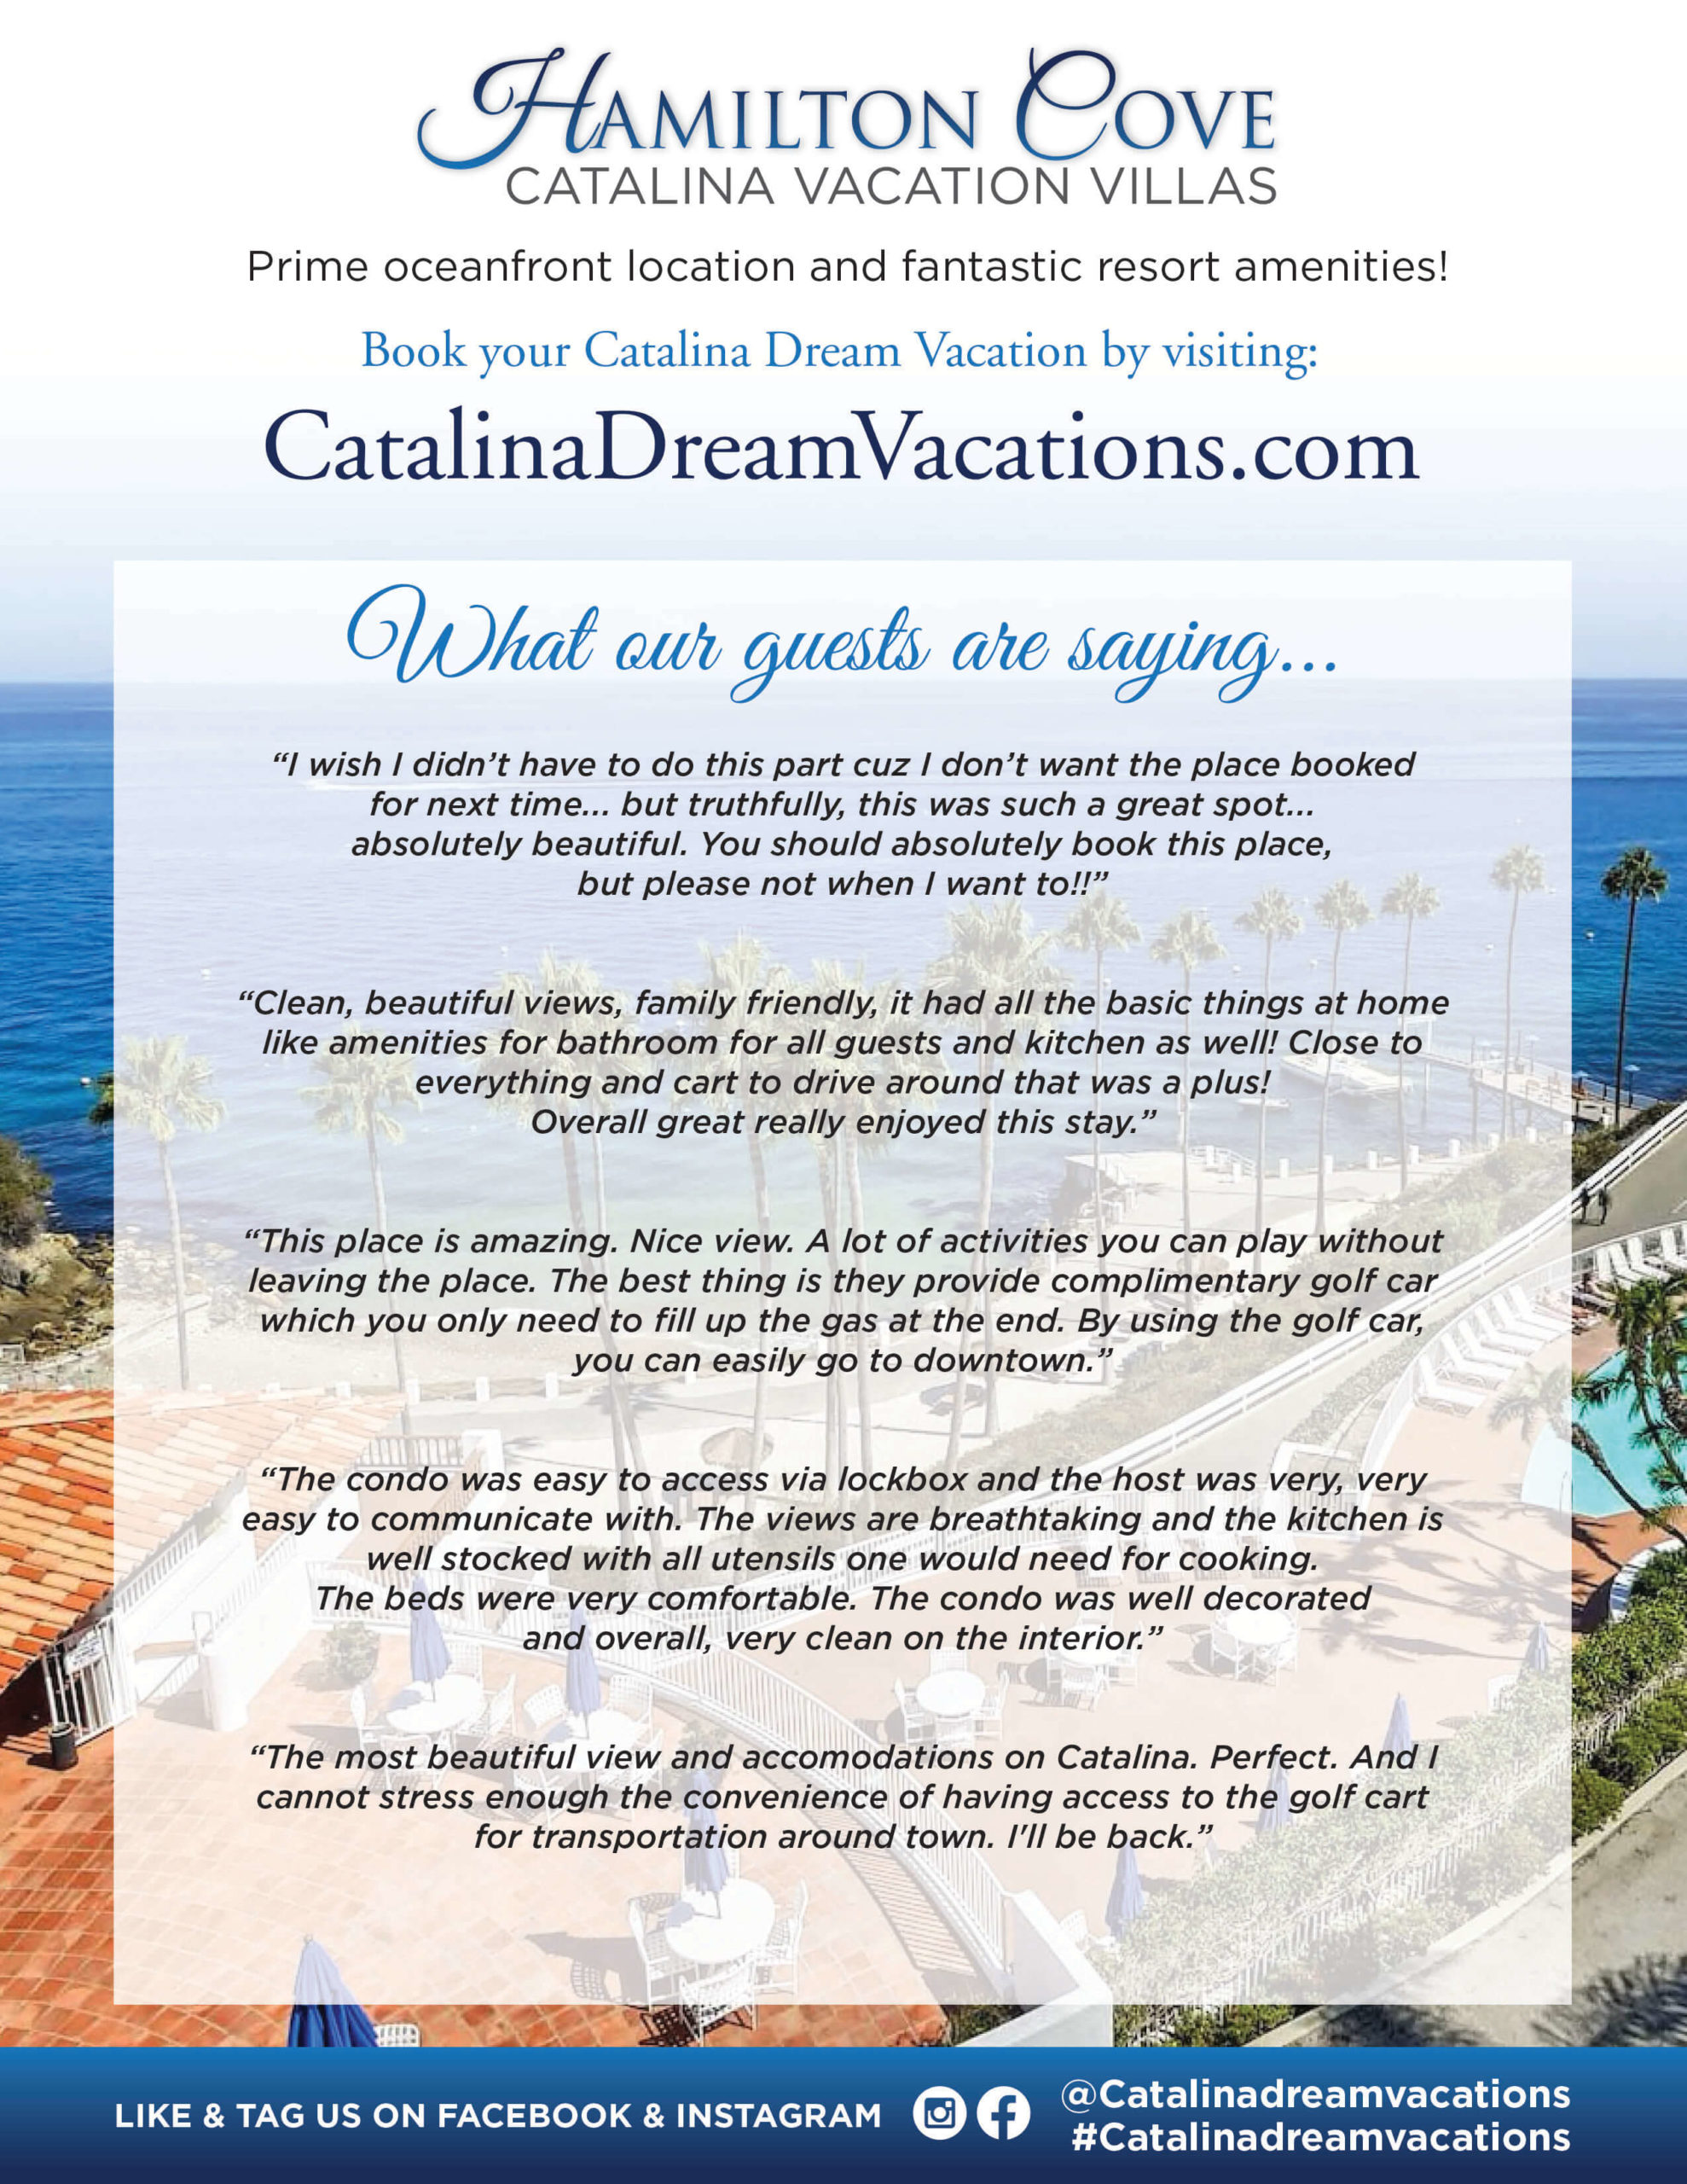 Hamilton Cove - Catalina Dream Vacations reviews